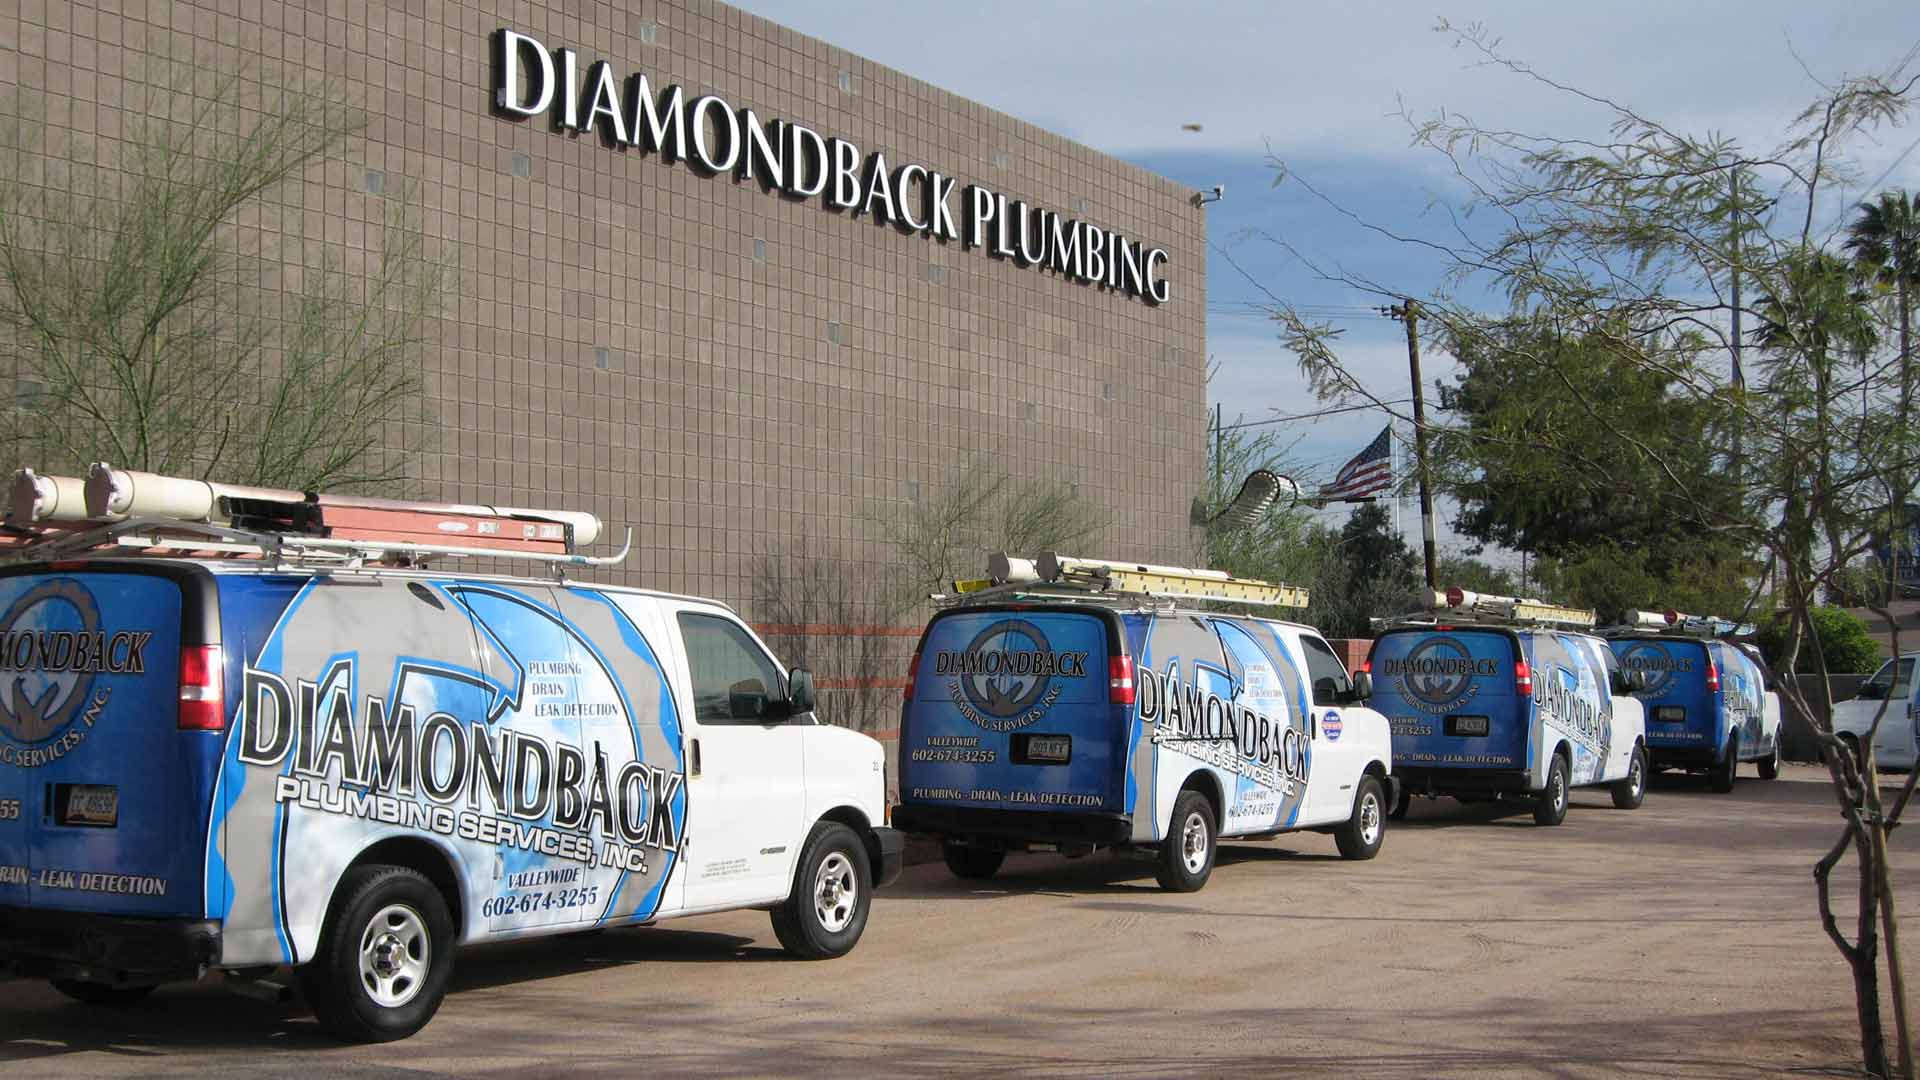 Diamondback Plumbing: Your Trusted Plumbing Partner in Phoenix, AZ